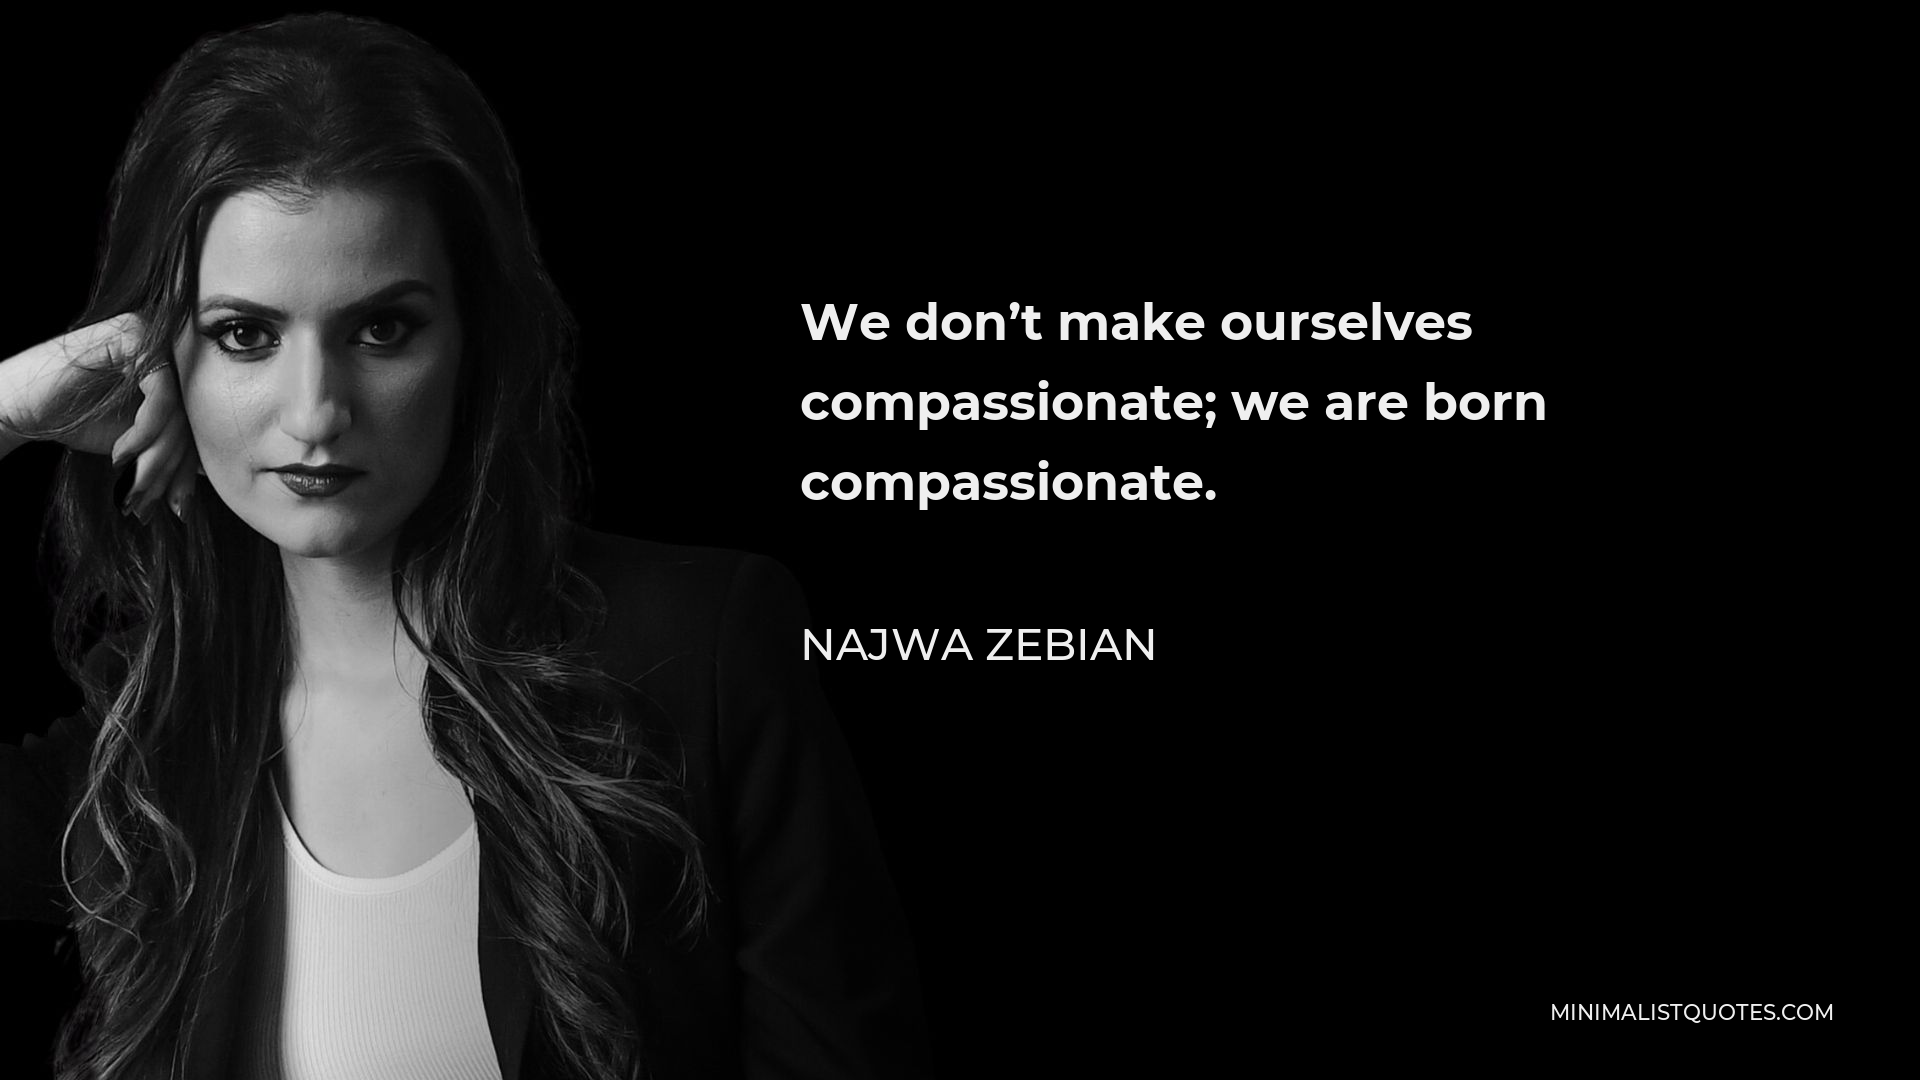 Najwa Zebian Quote - We don’t make ourselves compassionate; we are born compassionate.